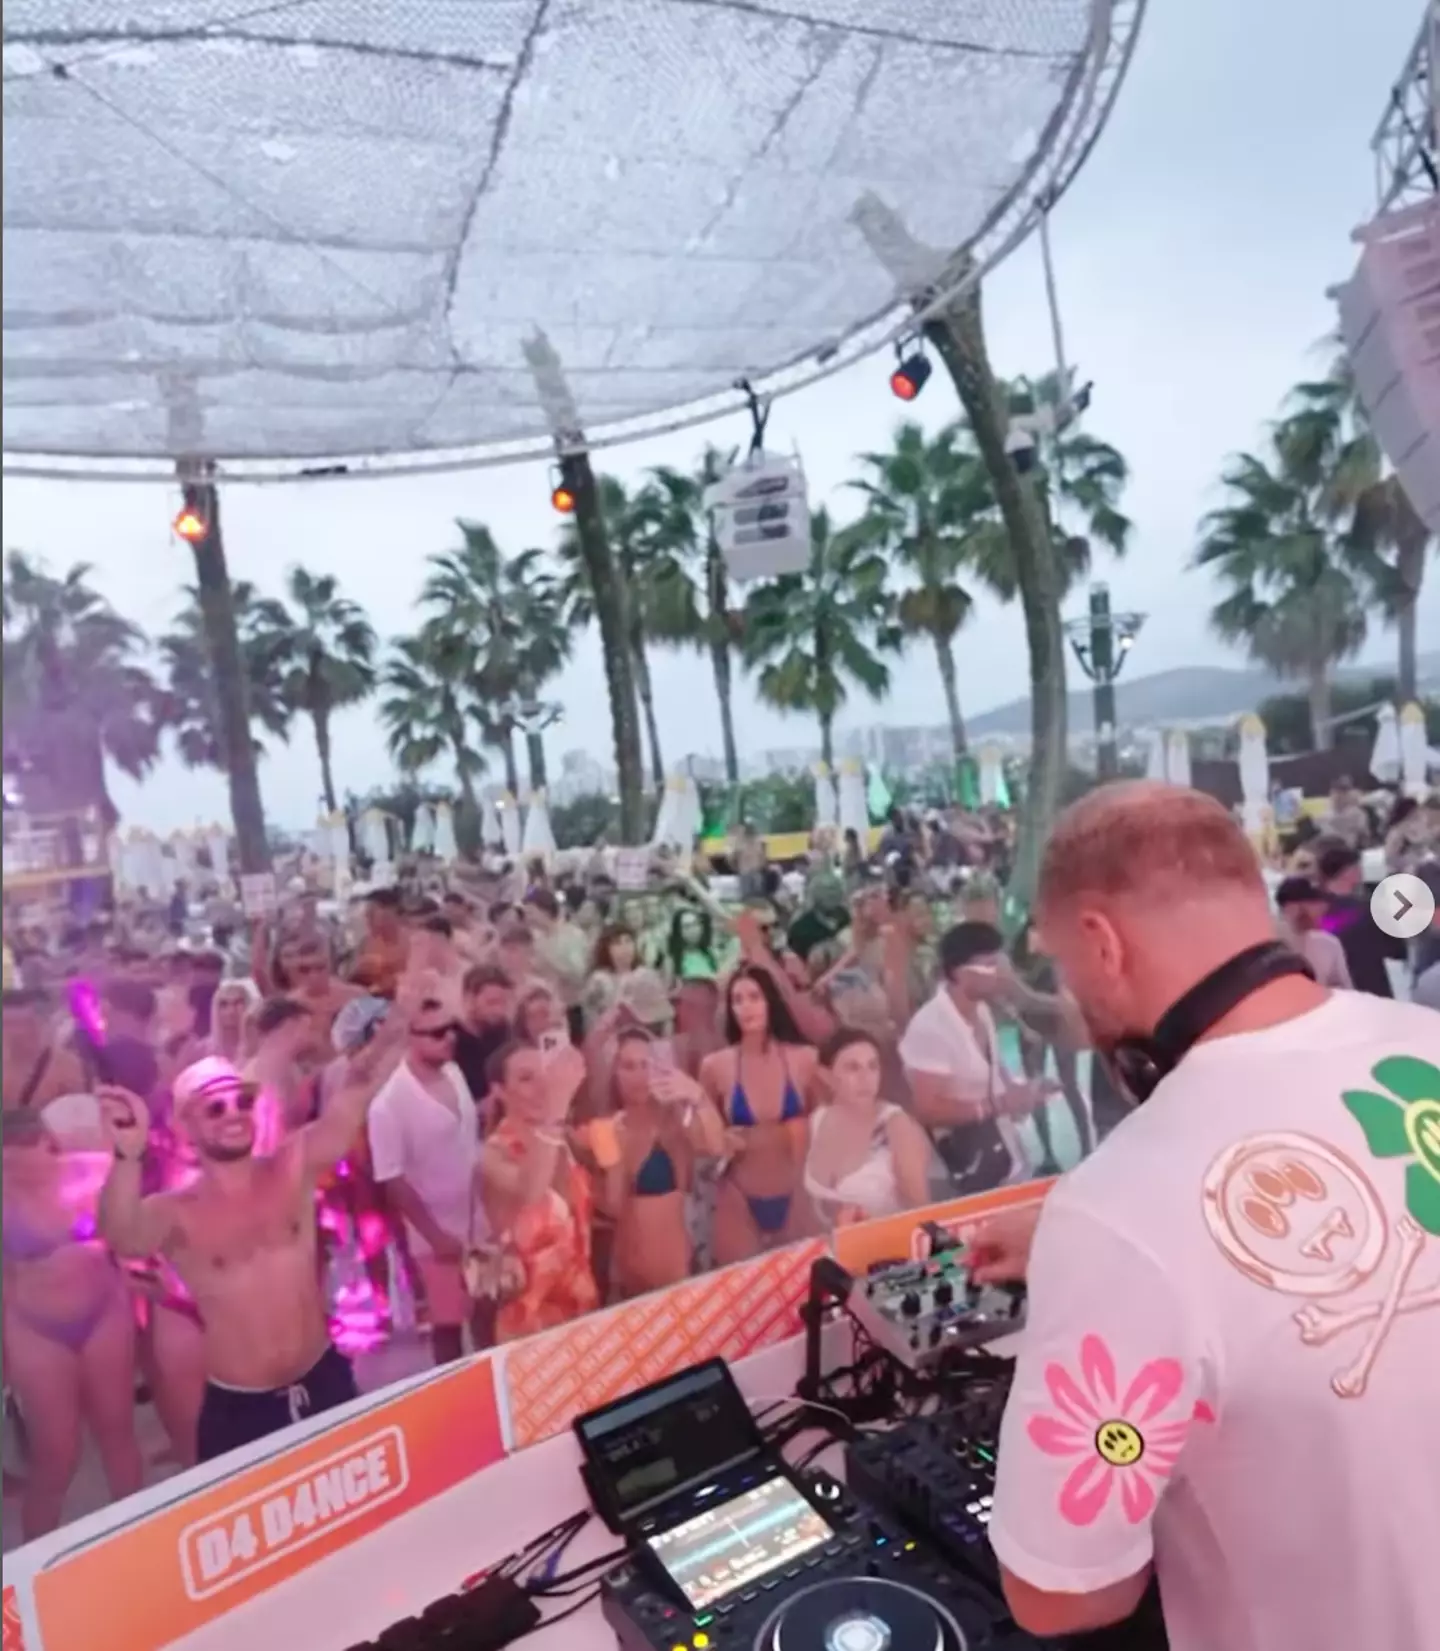 James regularly DJs in Ibiza.